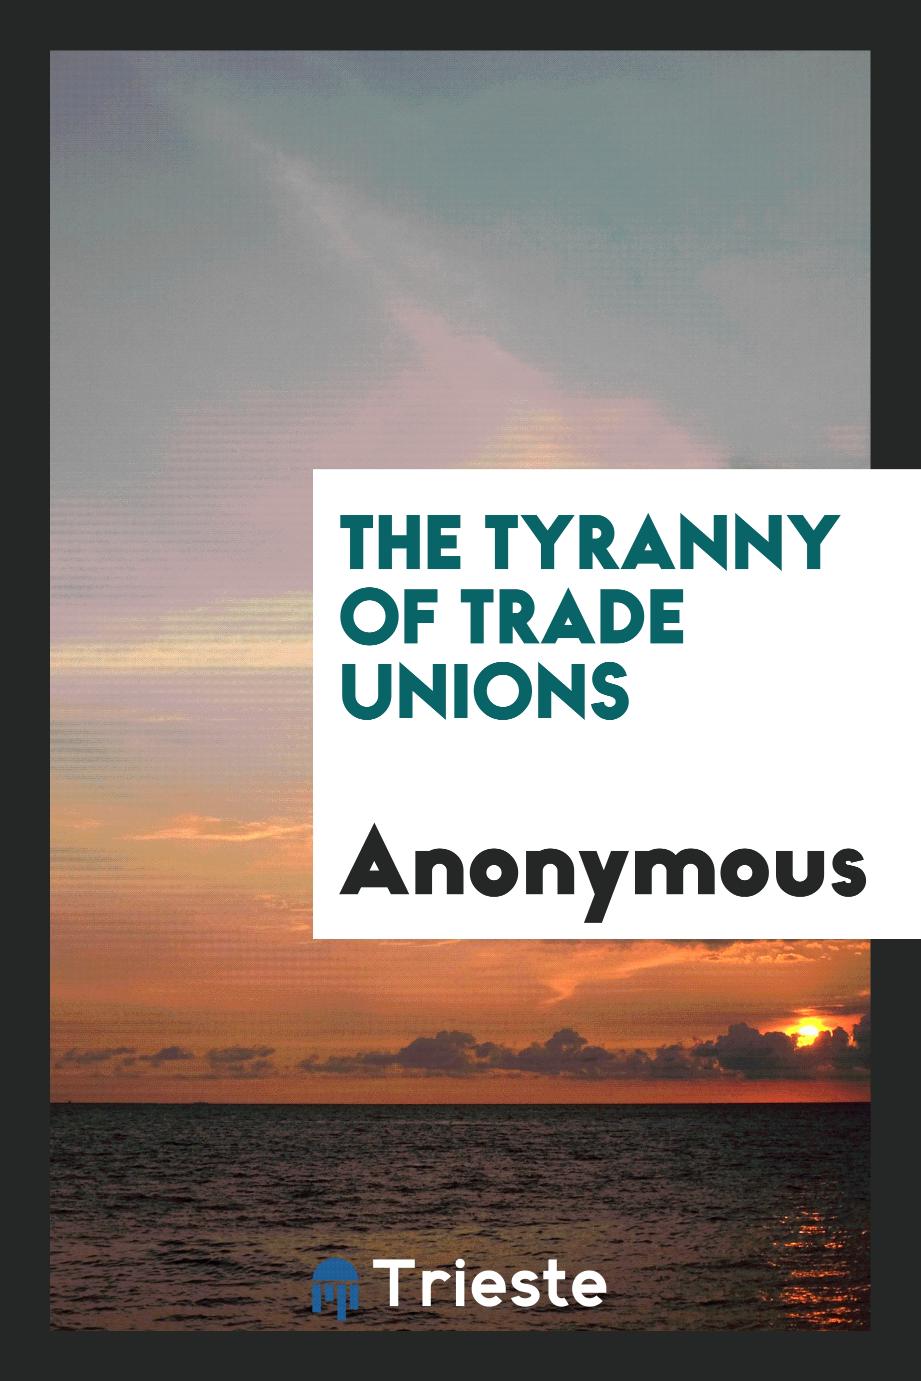 The tyranny of trade unions